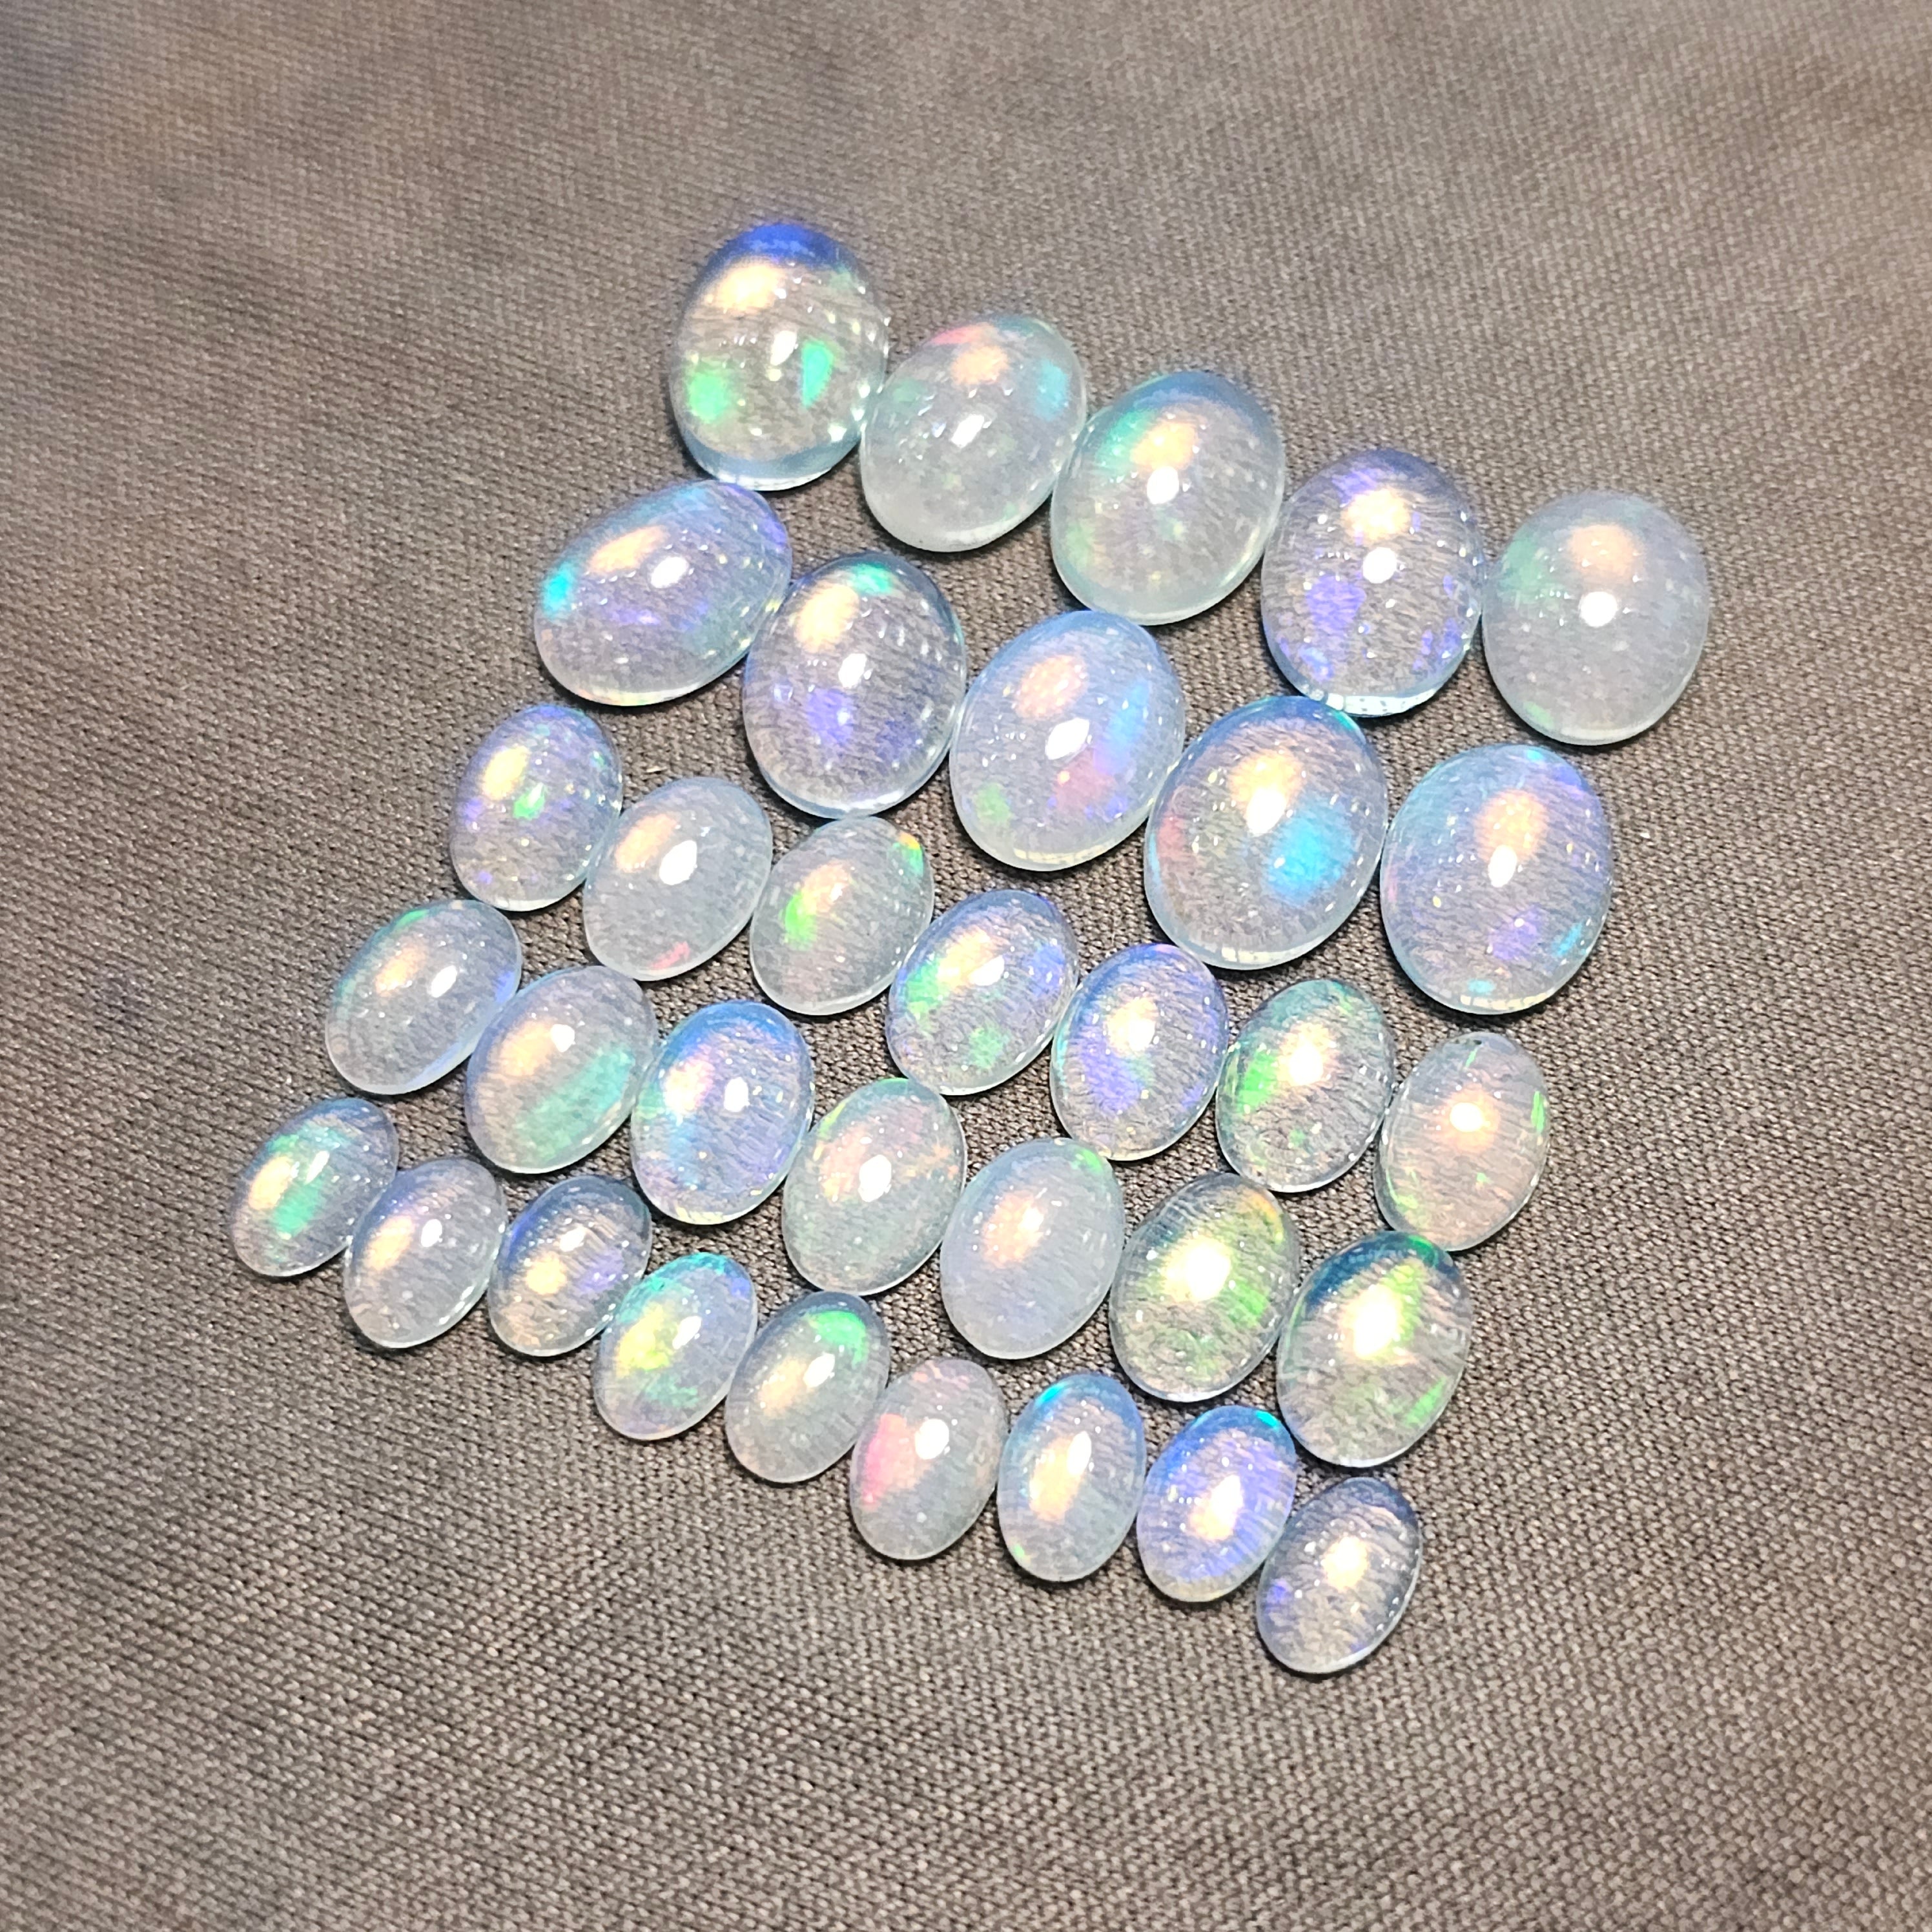 33 pcs Natural Ethiopian Opal Opal Cabochon Gemstone Oval Shape:6-9mm - The LabradoriteKing